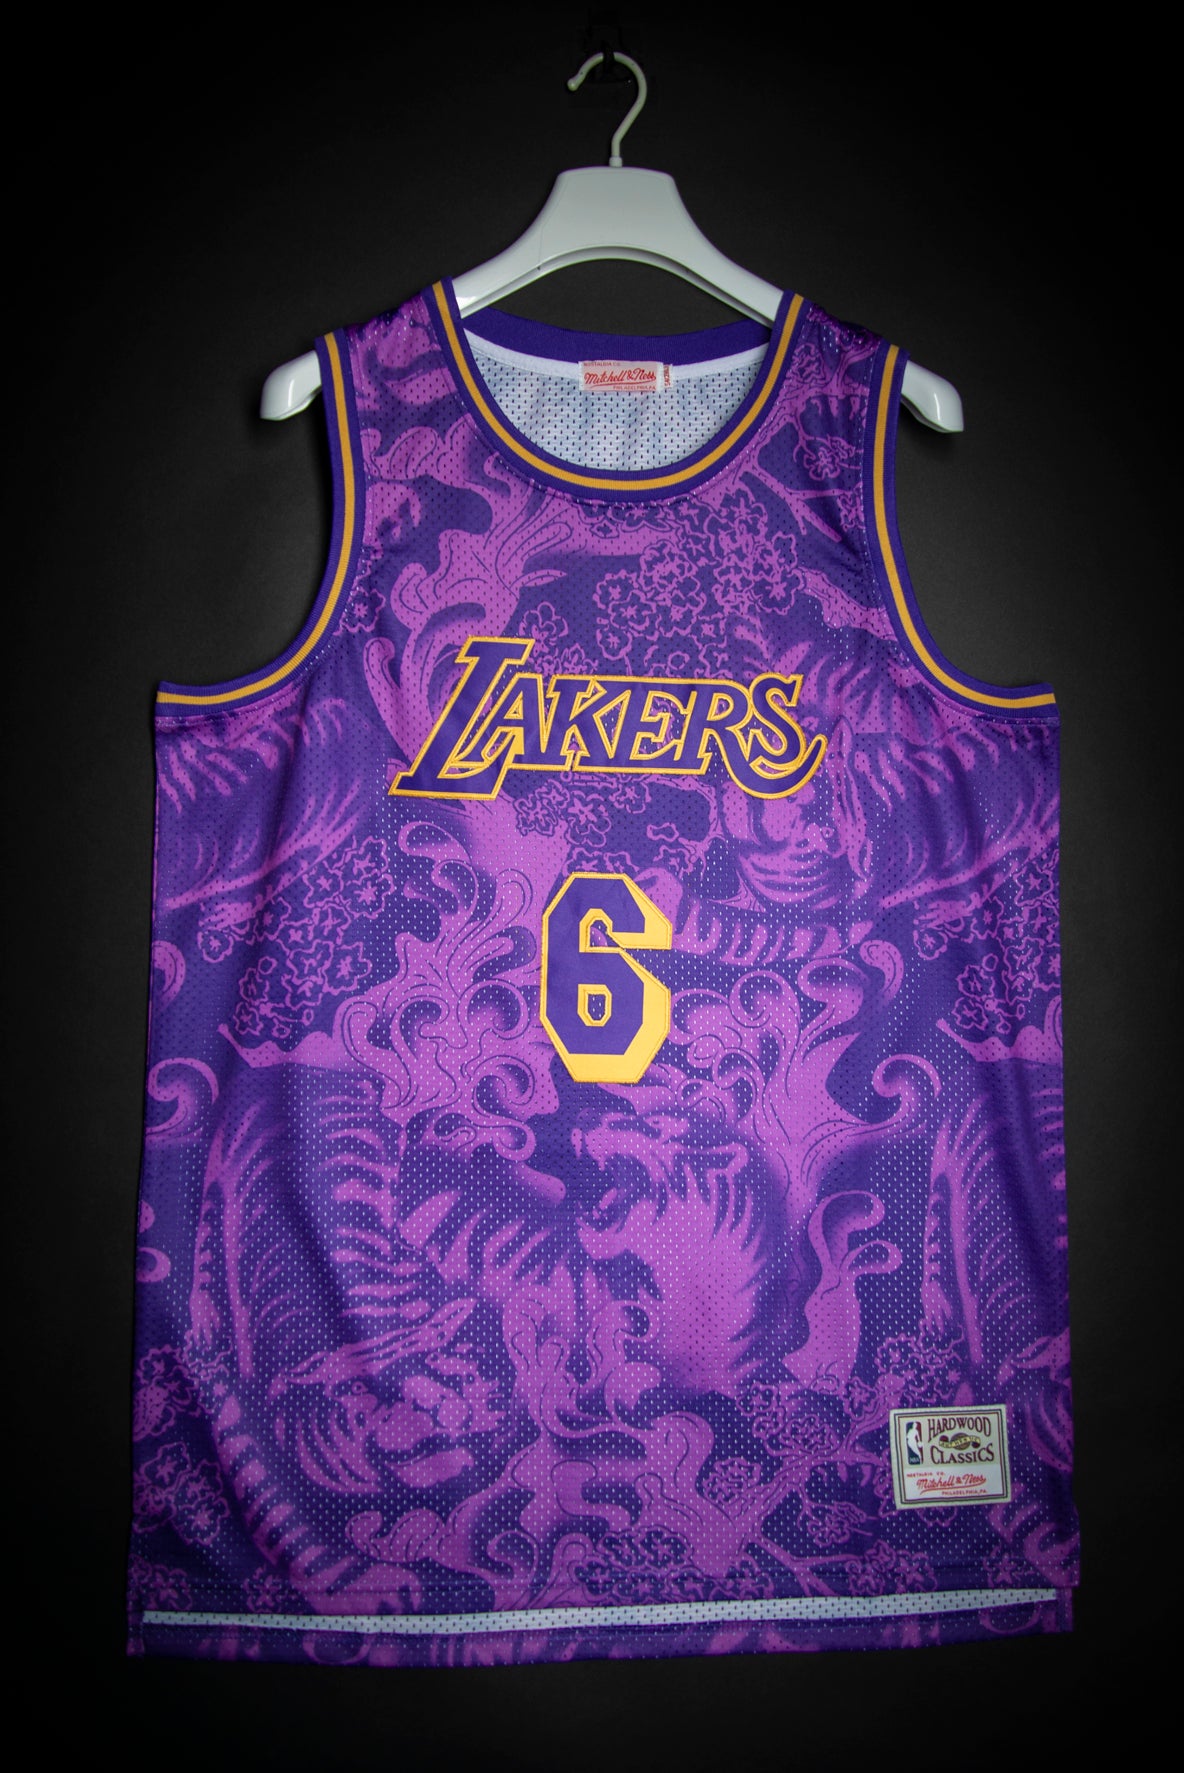 LeBron, Lakers top NBA jersey, merchandise sales in PH